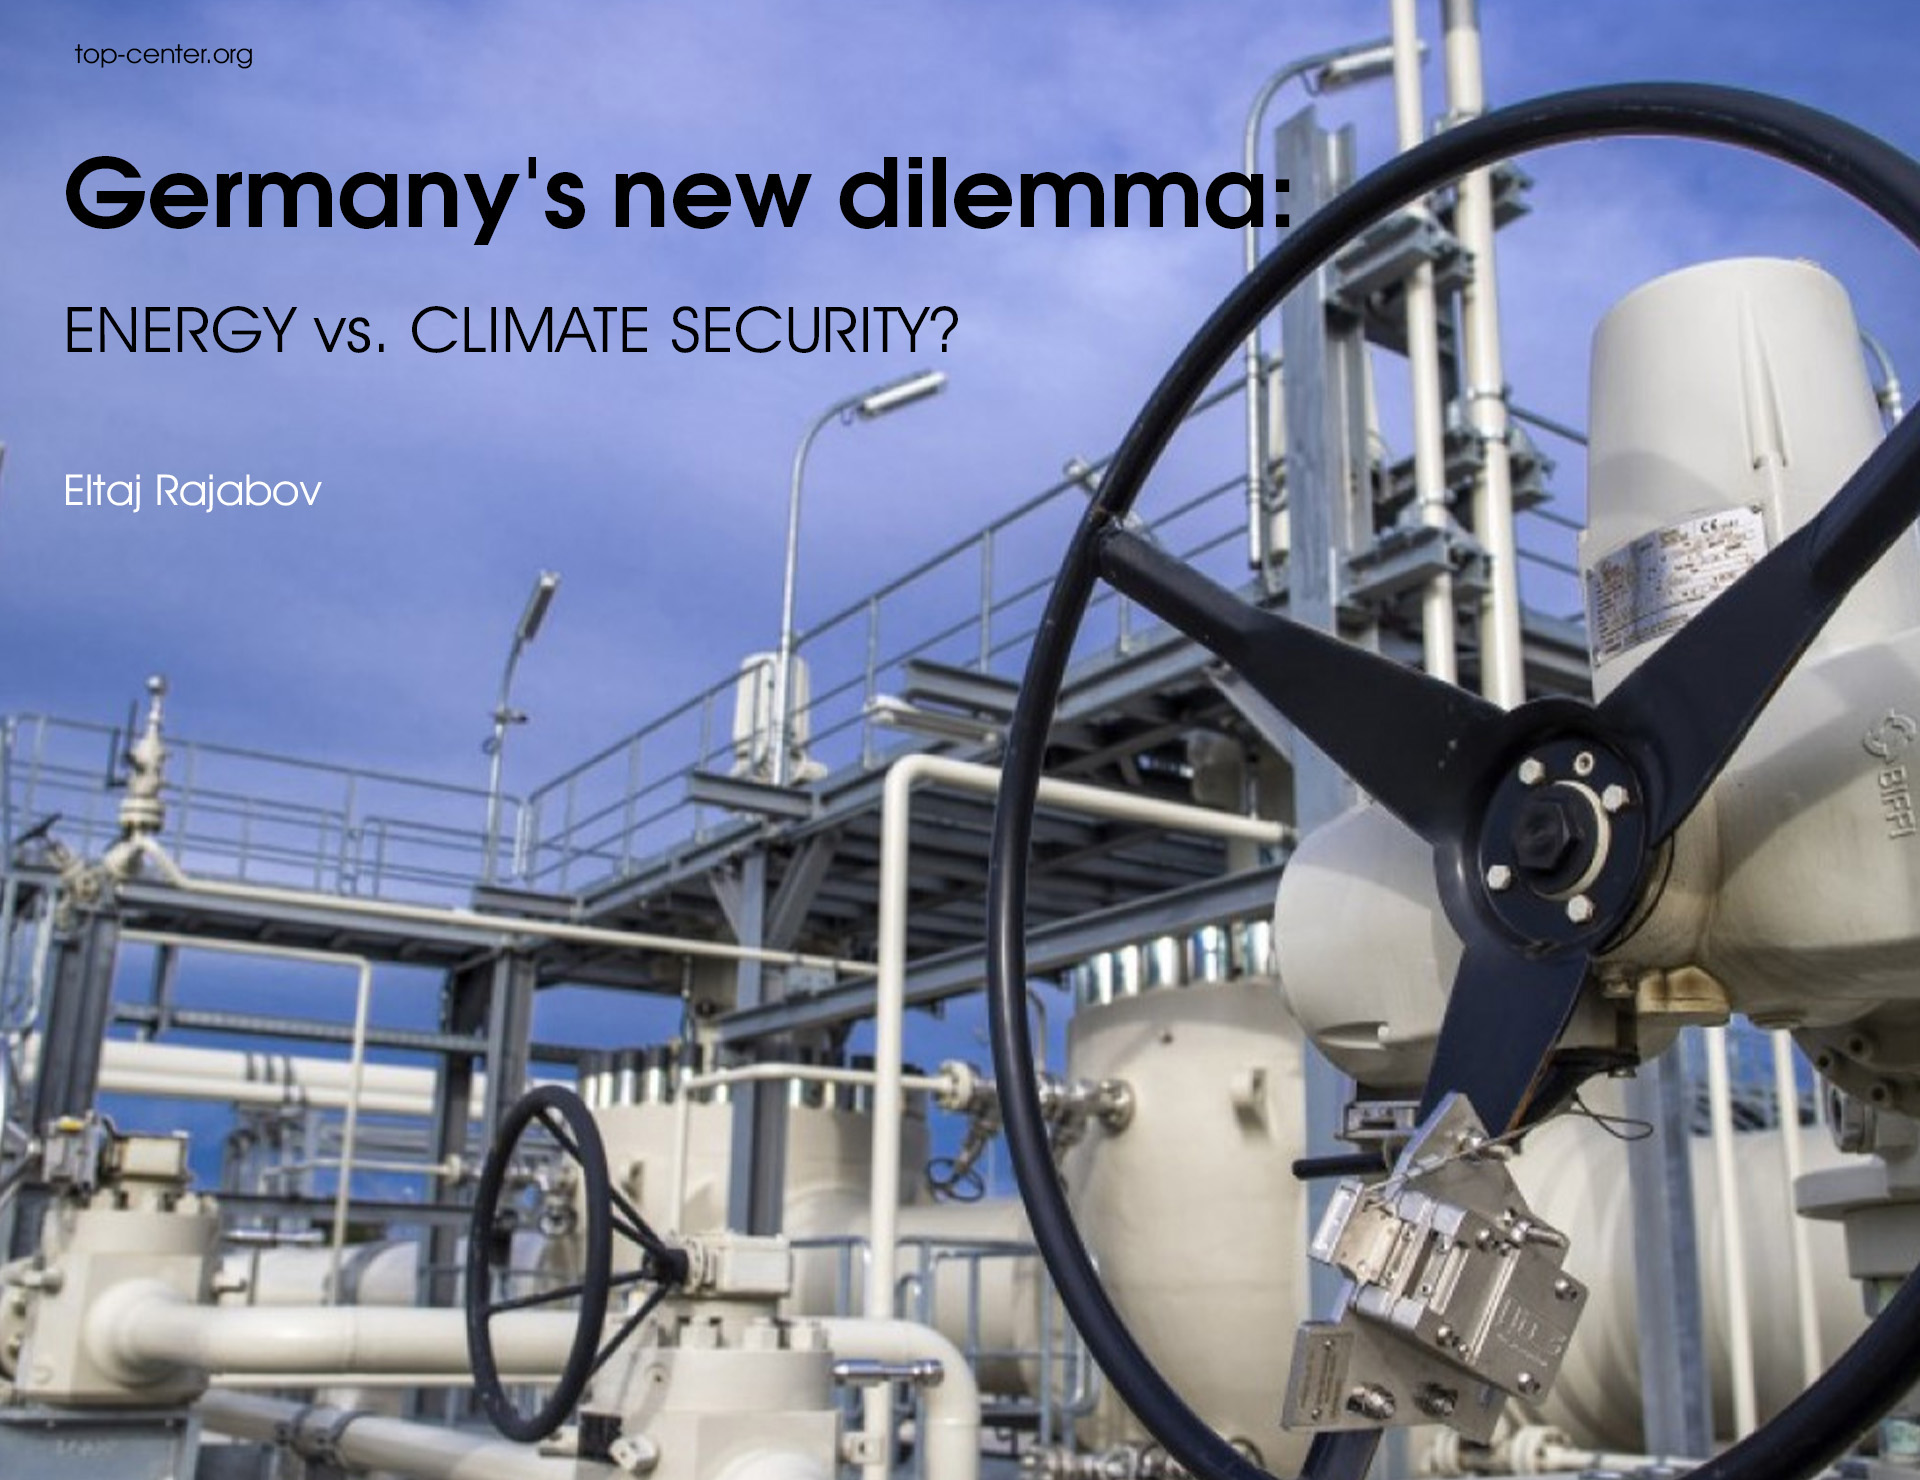 Germany's new dilemma: Energy vs. Climate Security?